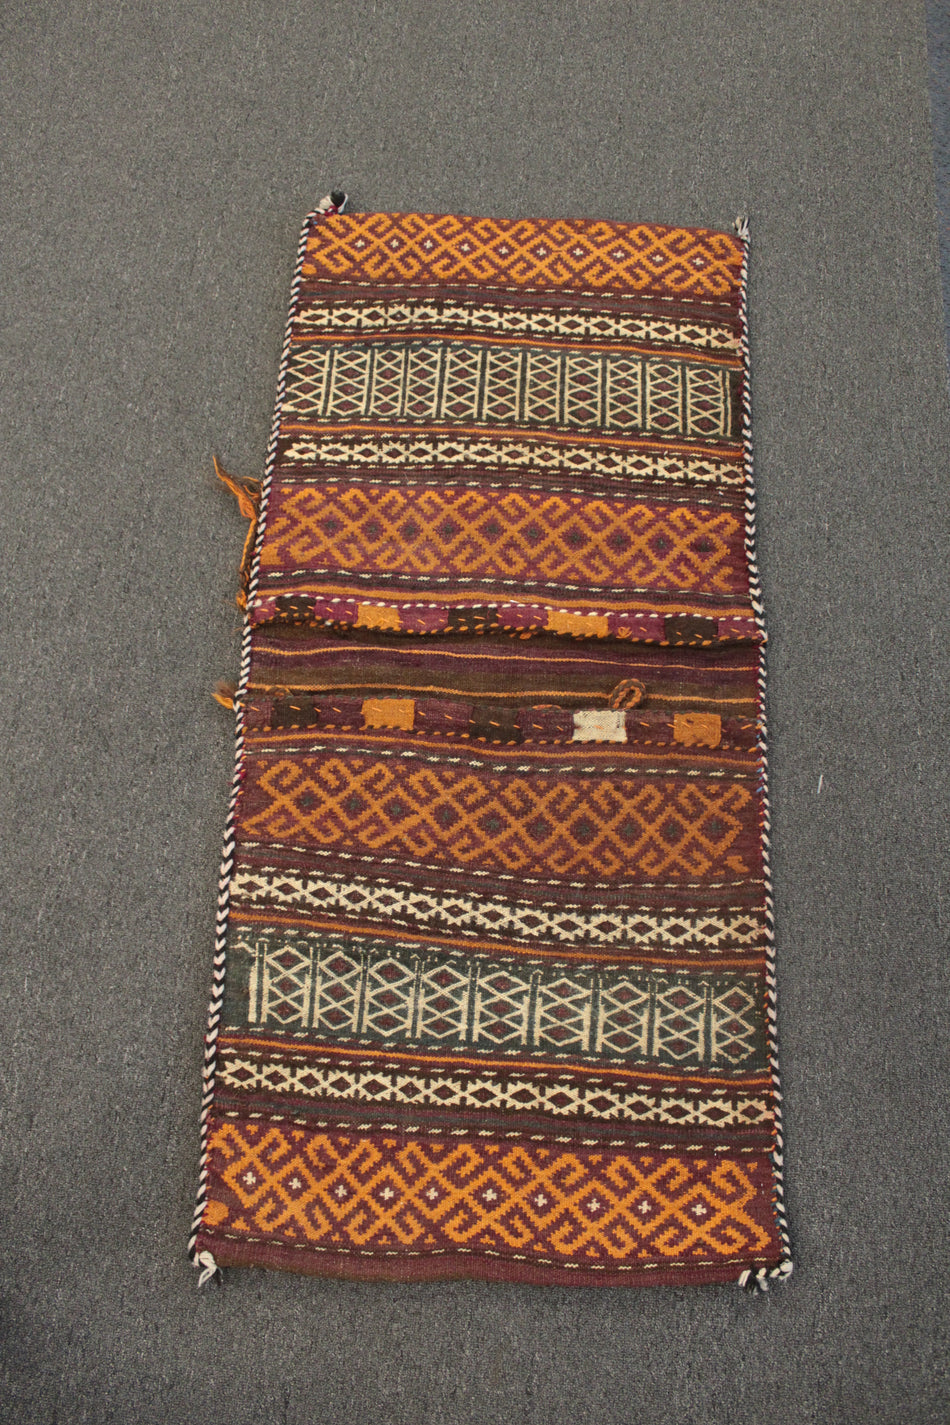 Handmade Afghan Saddle Bag - 138 cm x 53 cm